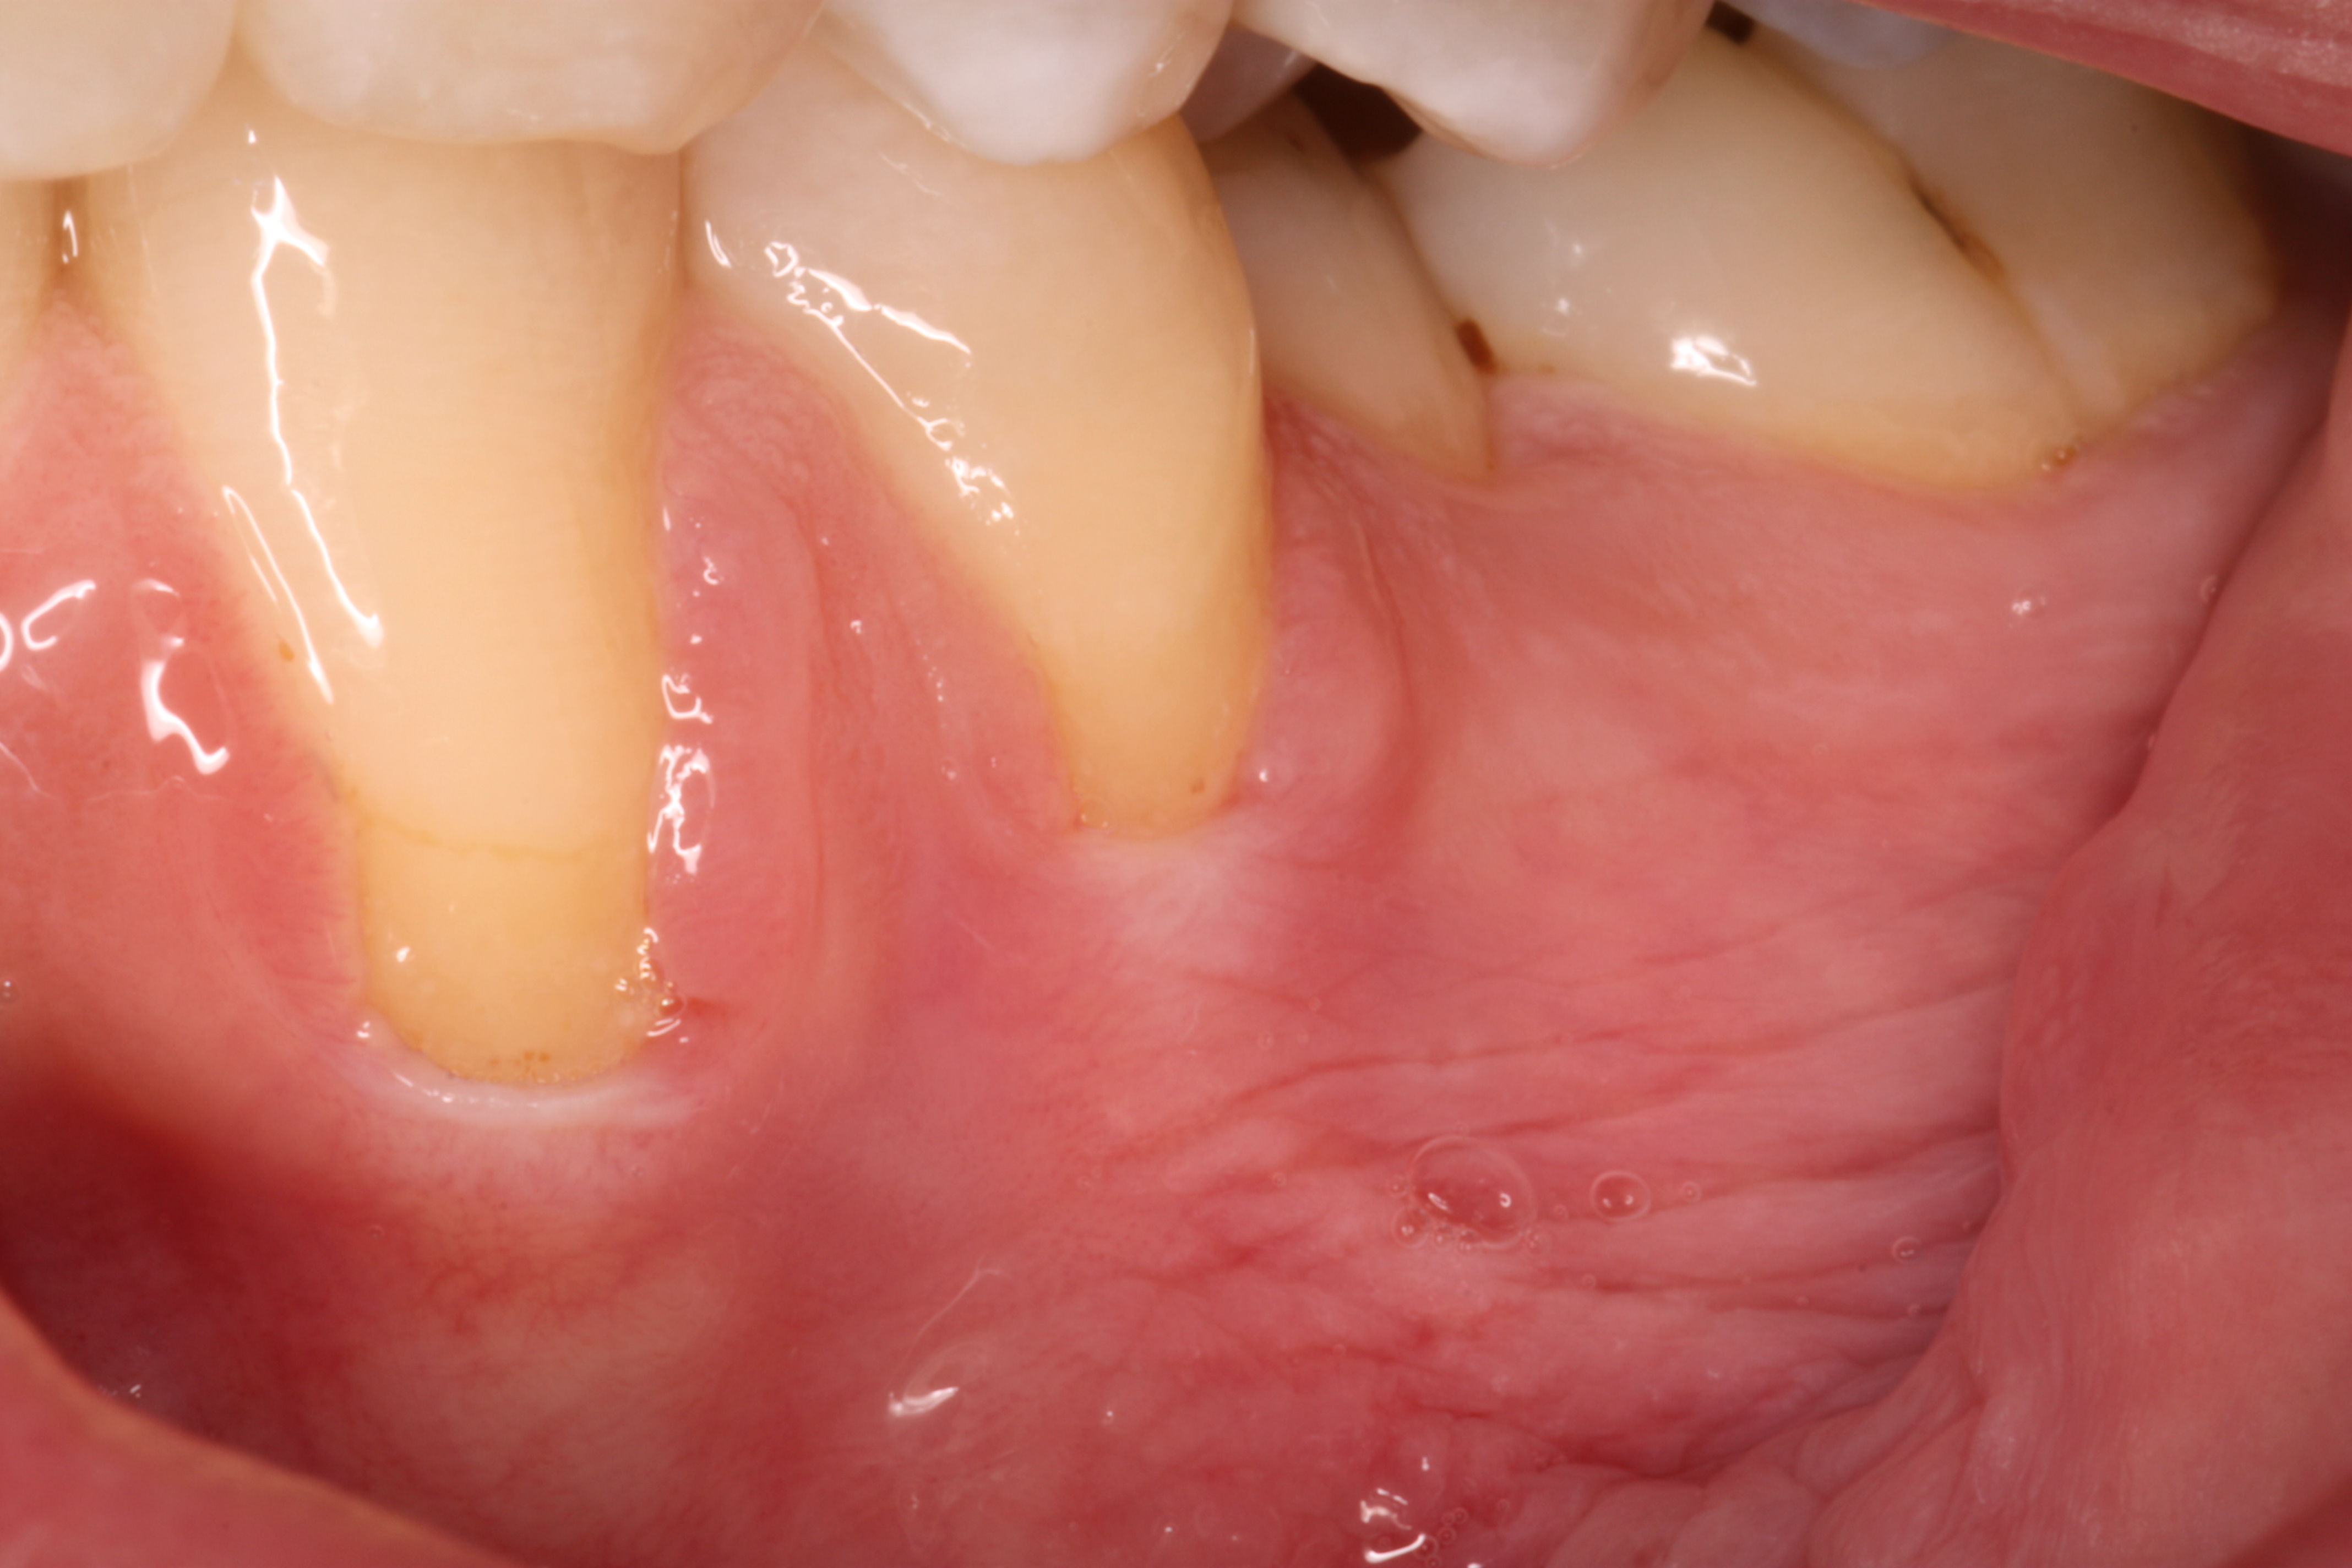 Receding gums before a grafting procedure.